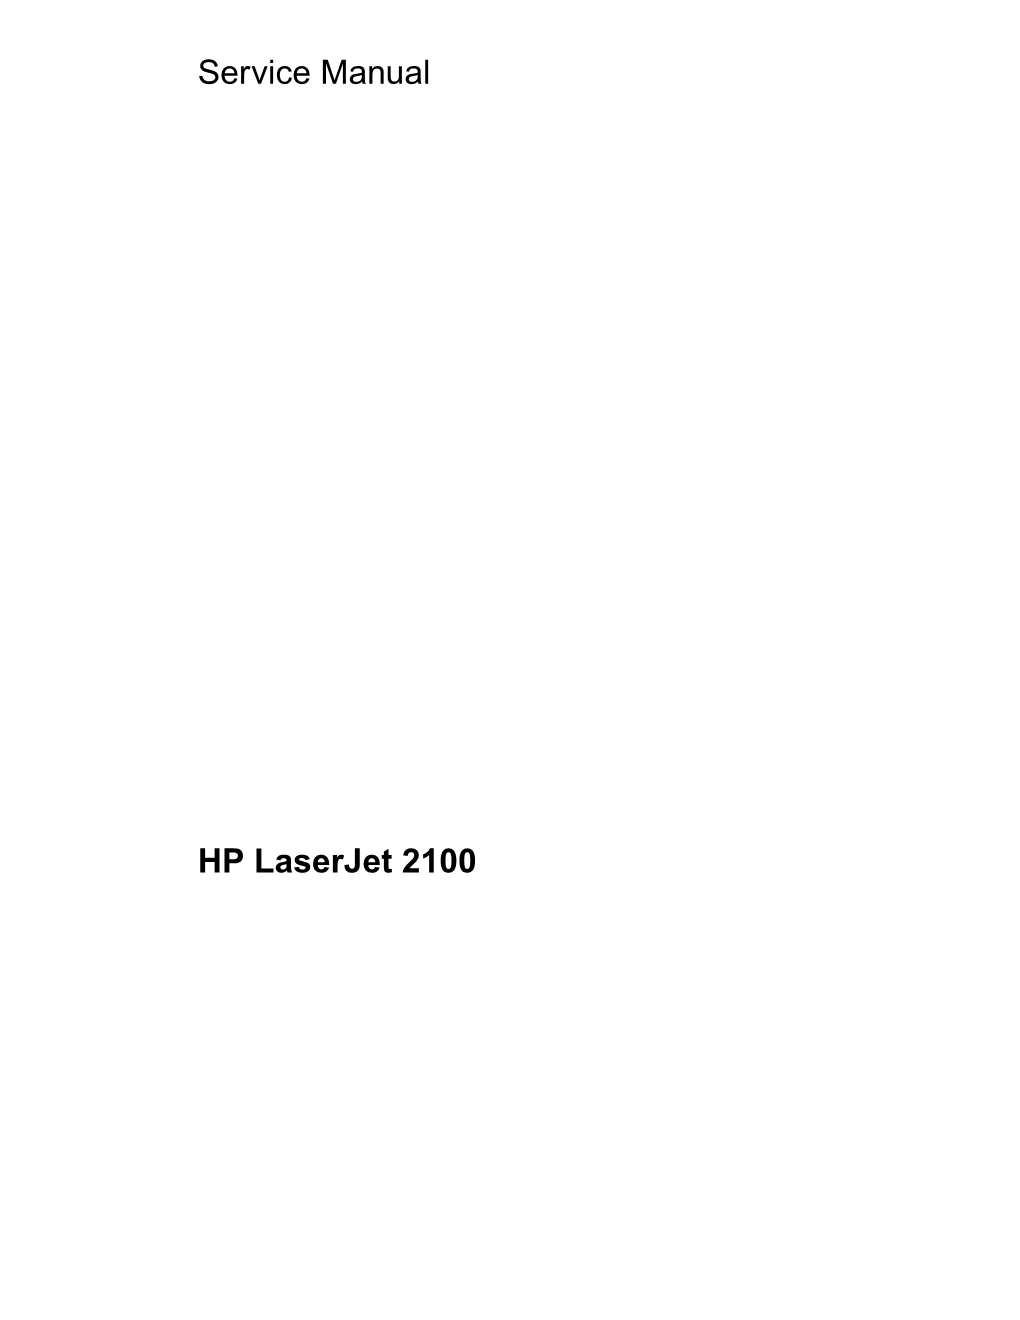 Service Manual HP Laserjet 2100